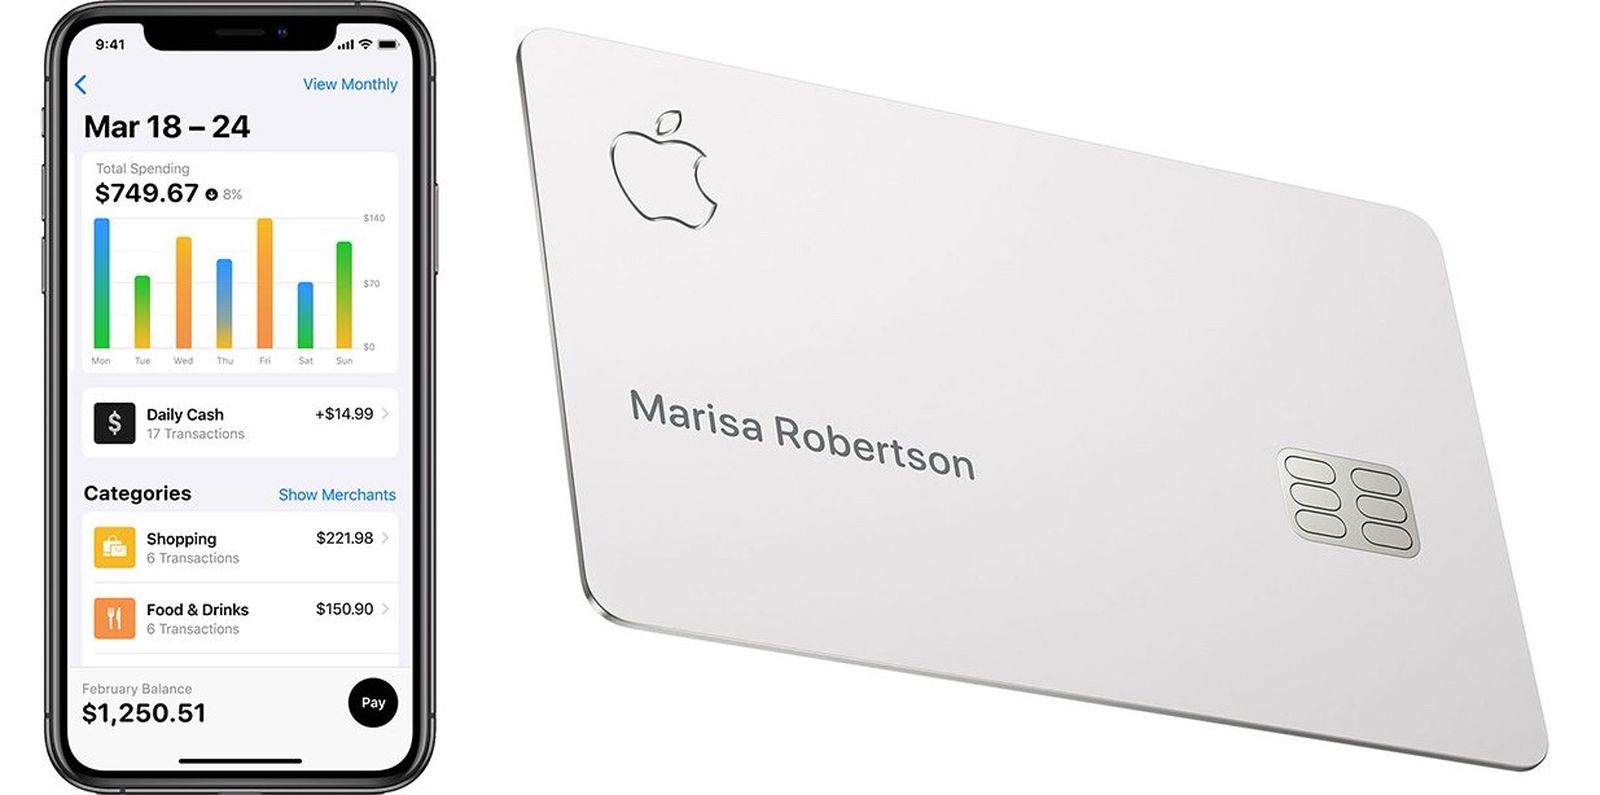 https://images.macrumors.com/t/op4PooYVxJzNoO1hng0z14RfFSw=/1600x/article-new/2019/04/apple-card-titanium-and-app.jpg